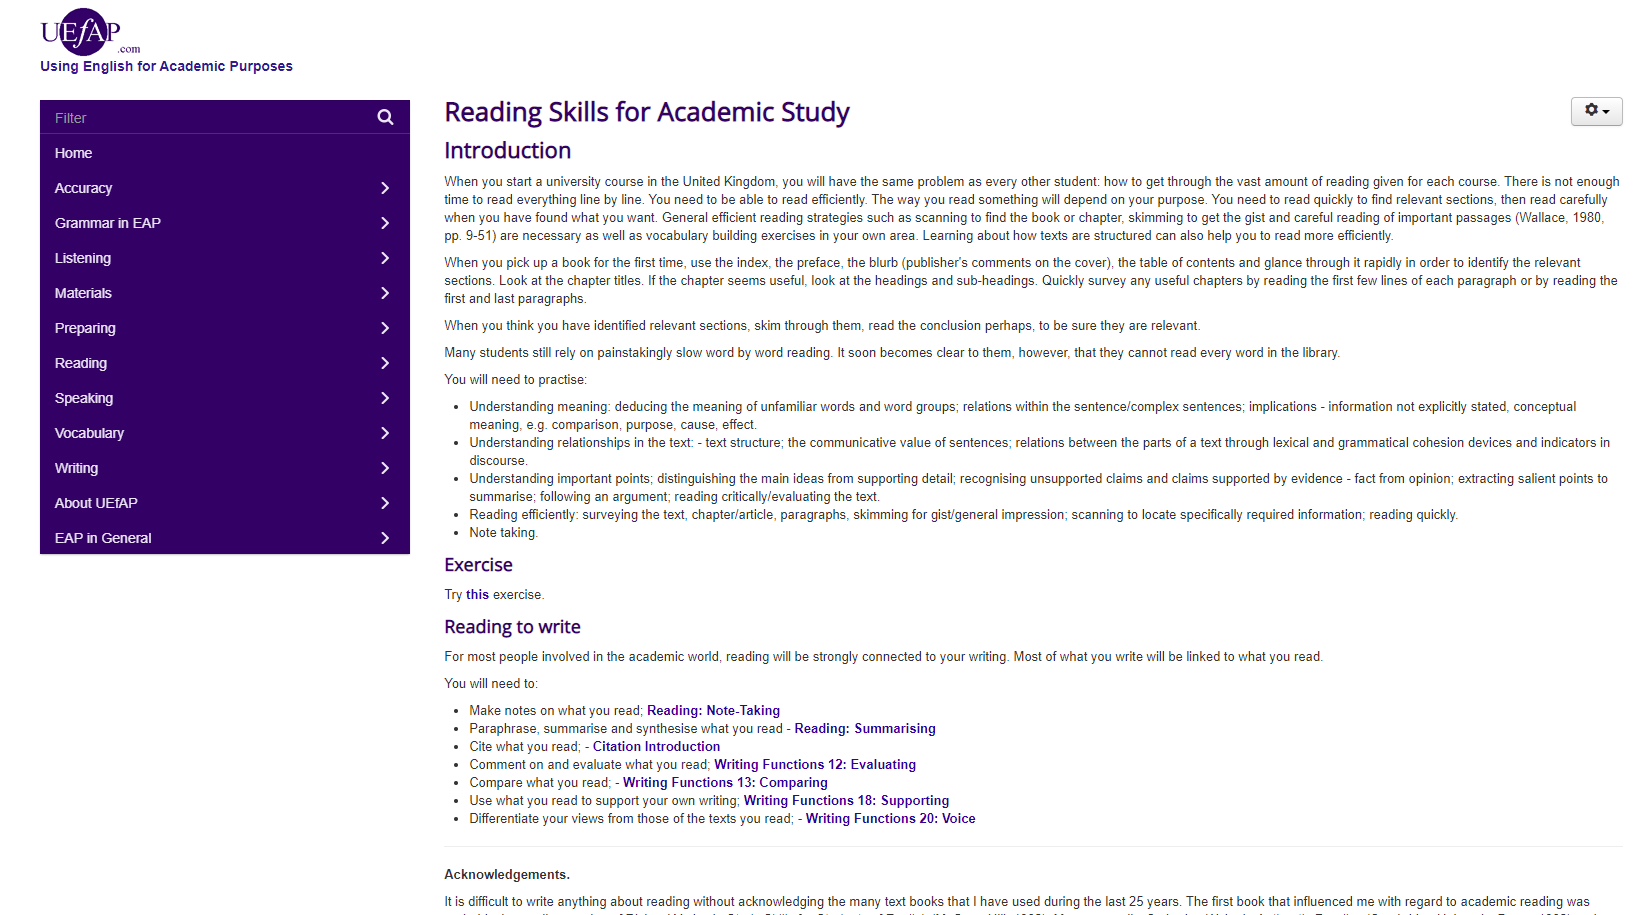 Reading skills for Academic Study